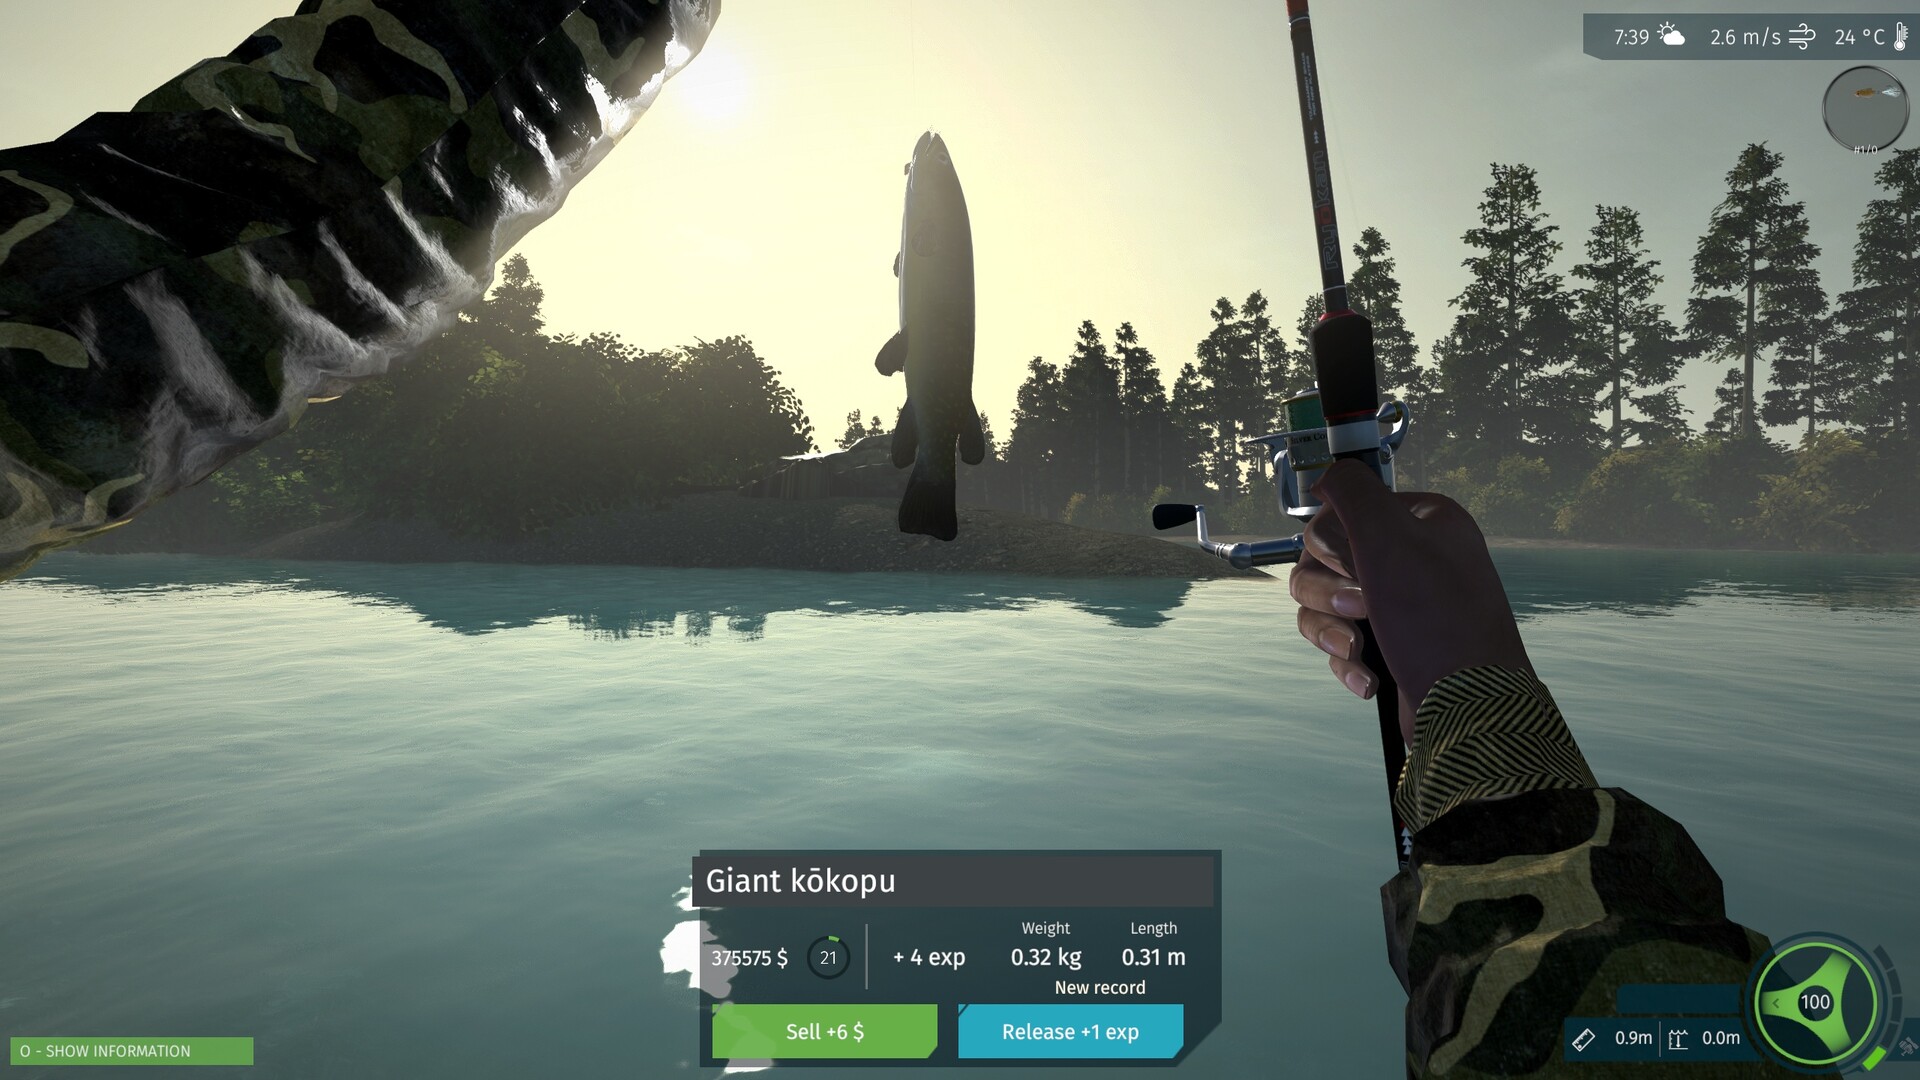 Ultimate Fishing Simulator - Taupo Lake DLC Steam CD Key